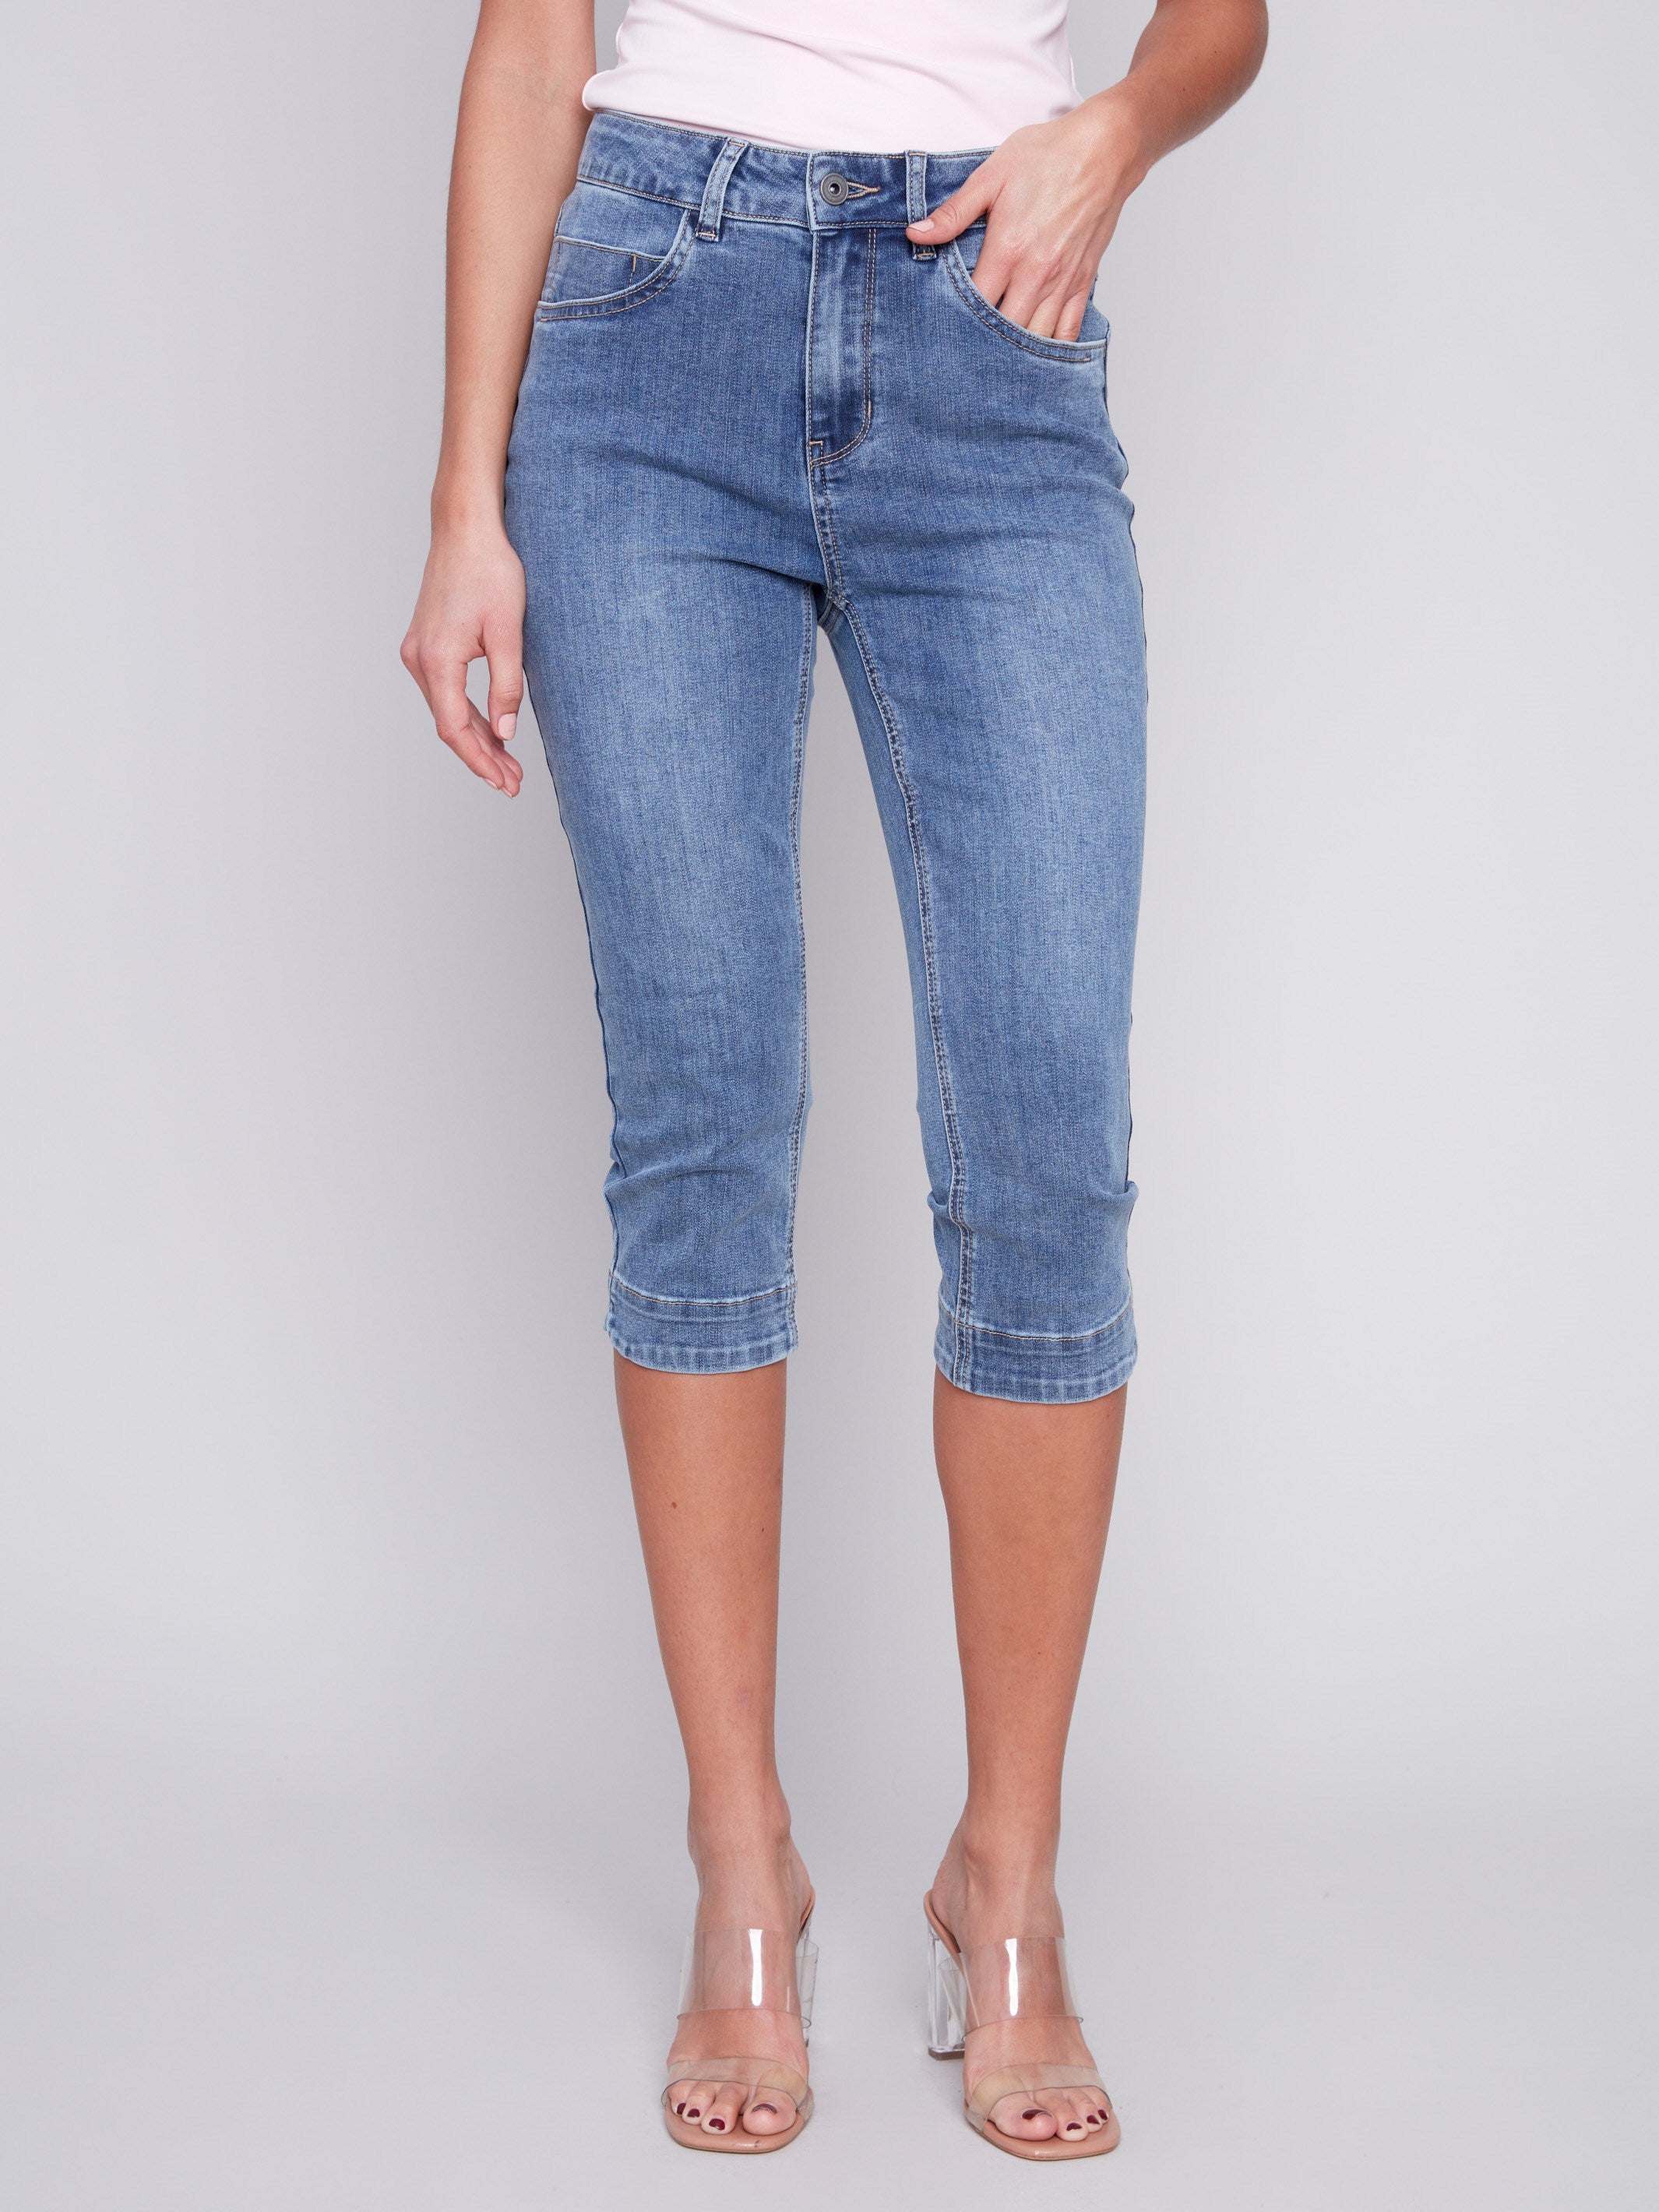 Denim for Women, Jeans, Jackets & Shorts